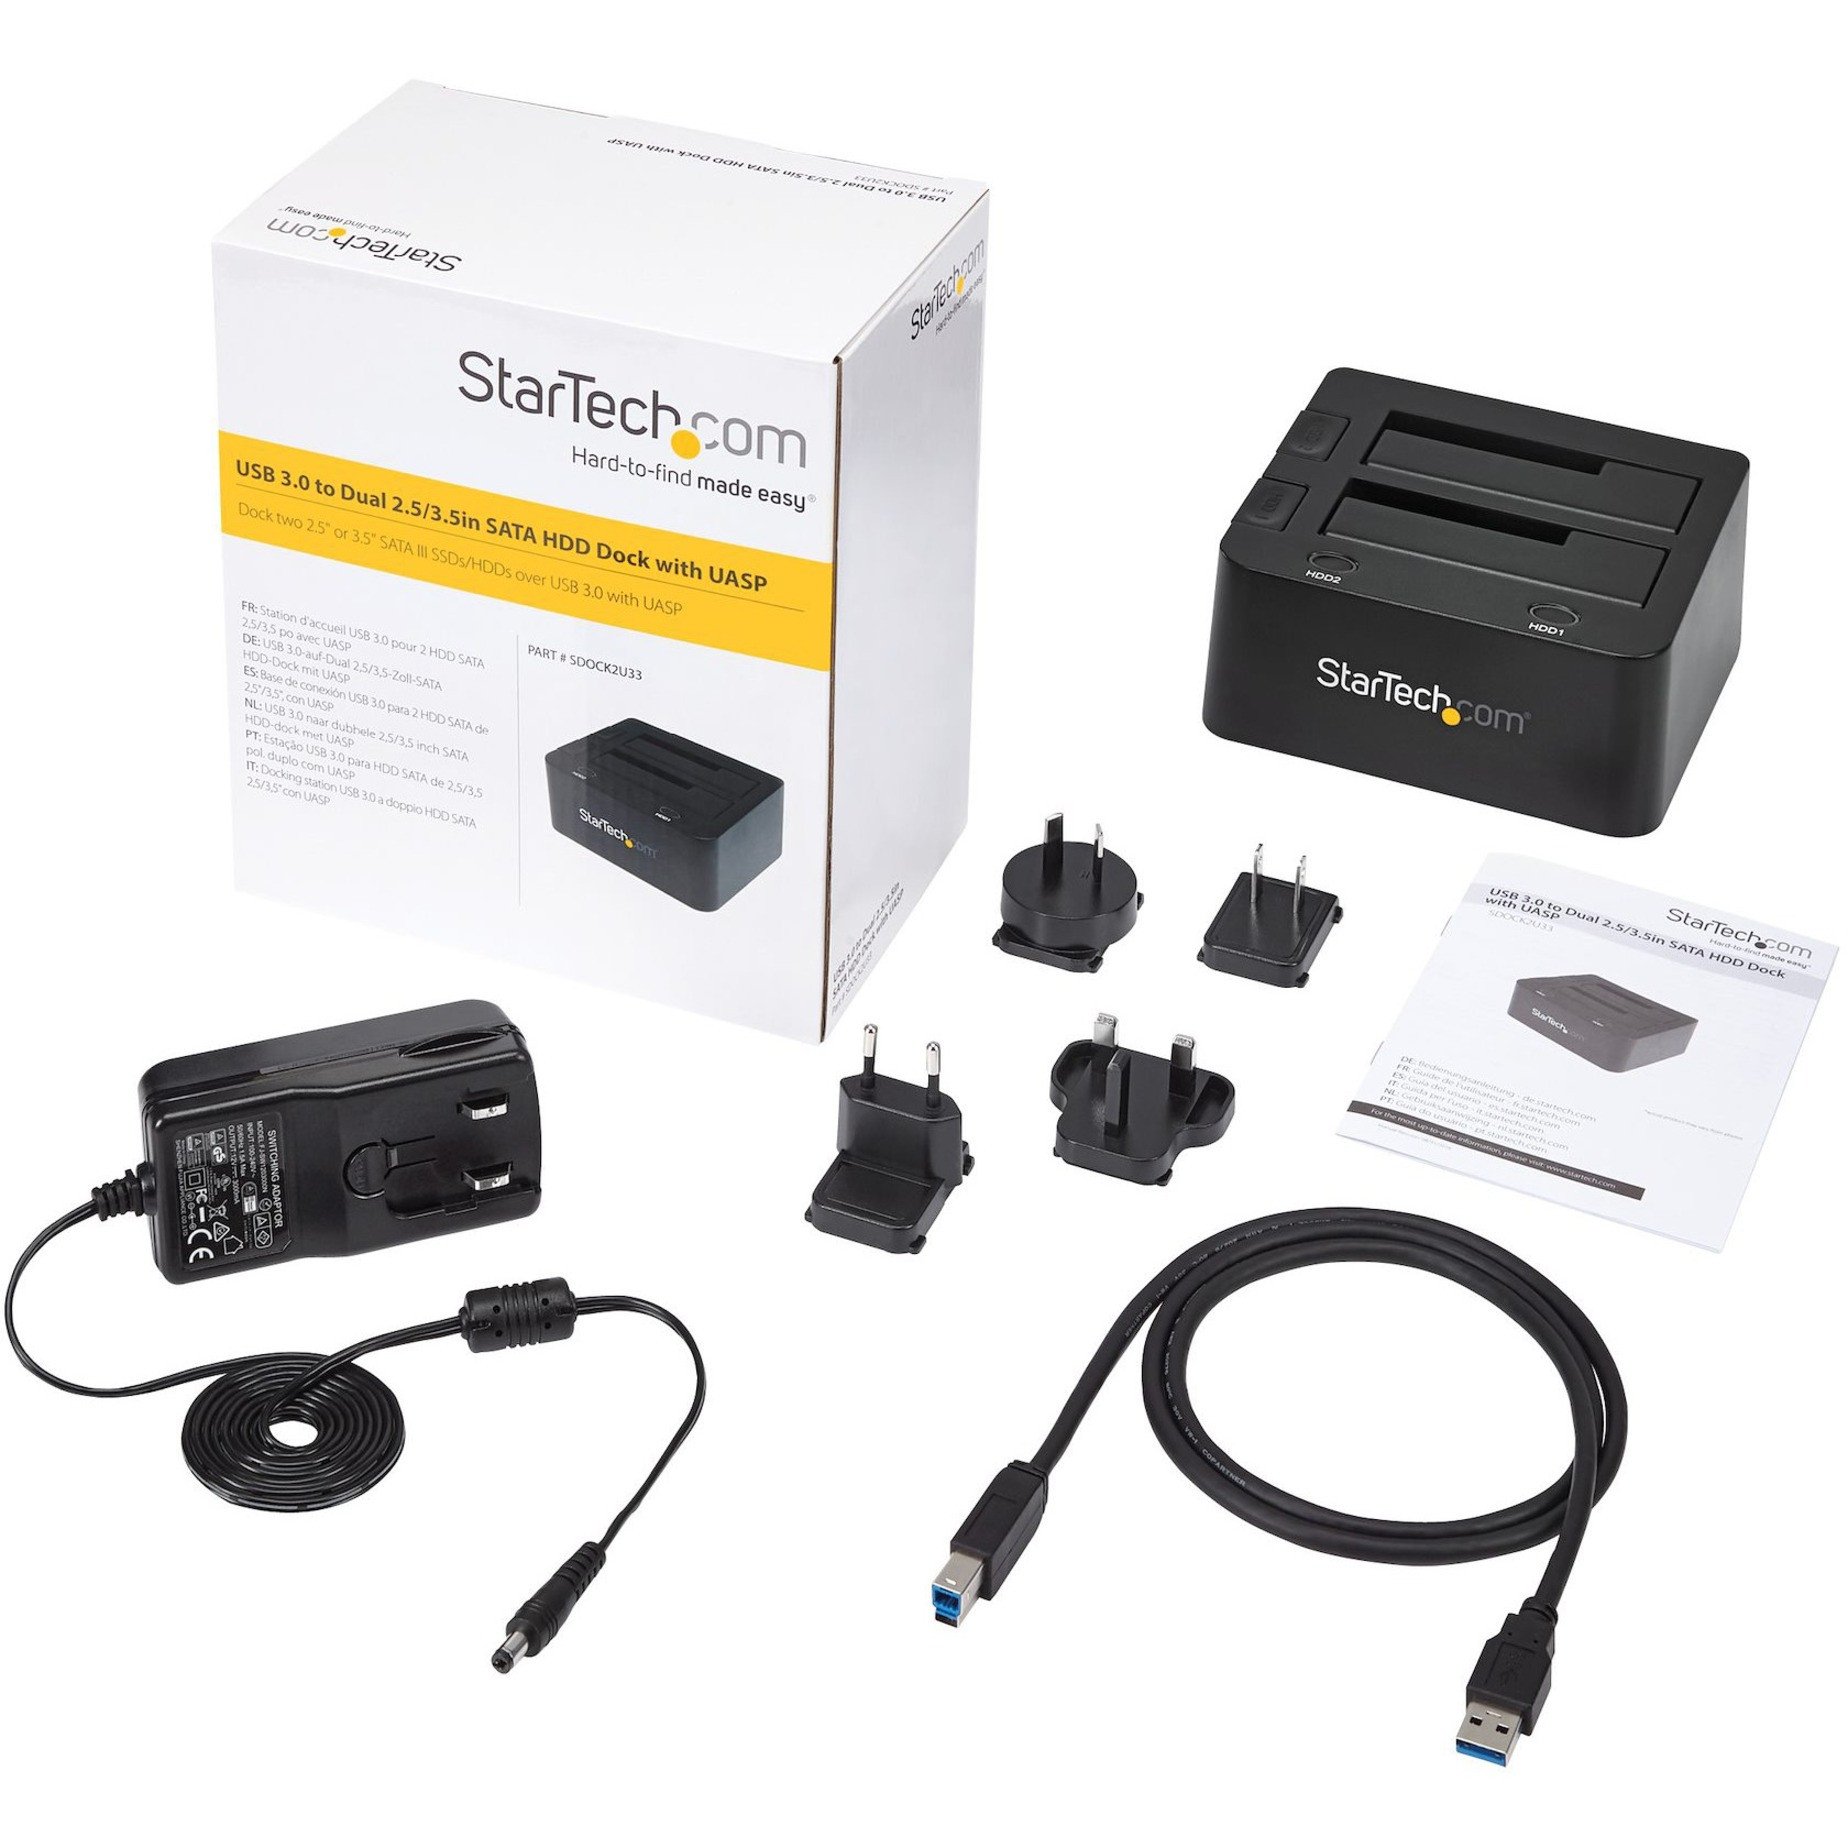 StarTech.com USB 3.0 to 2.5 SATA III Hard Drive Adap